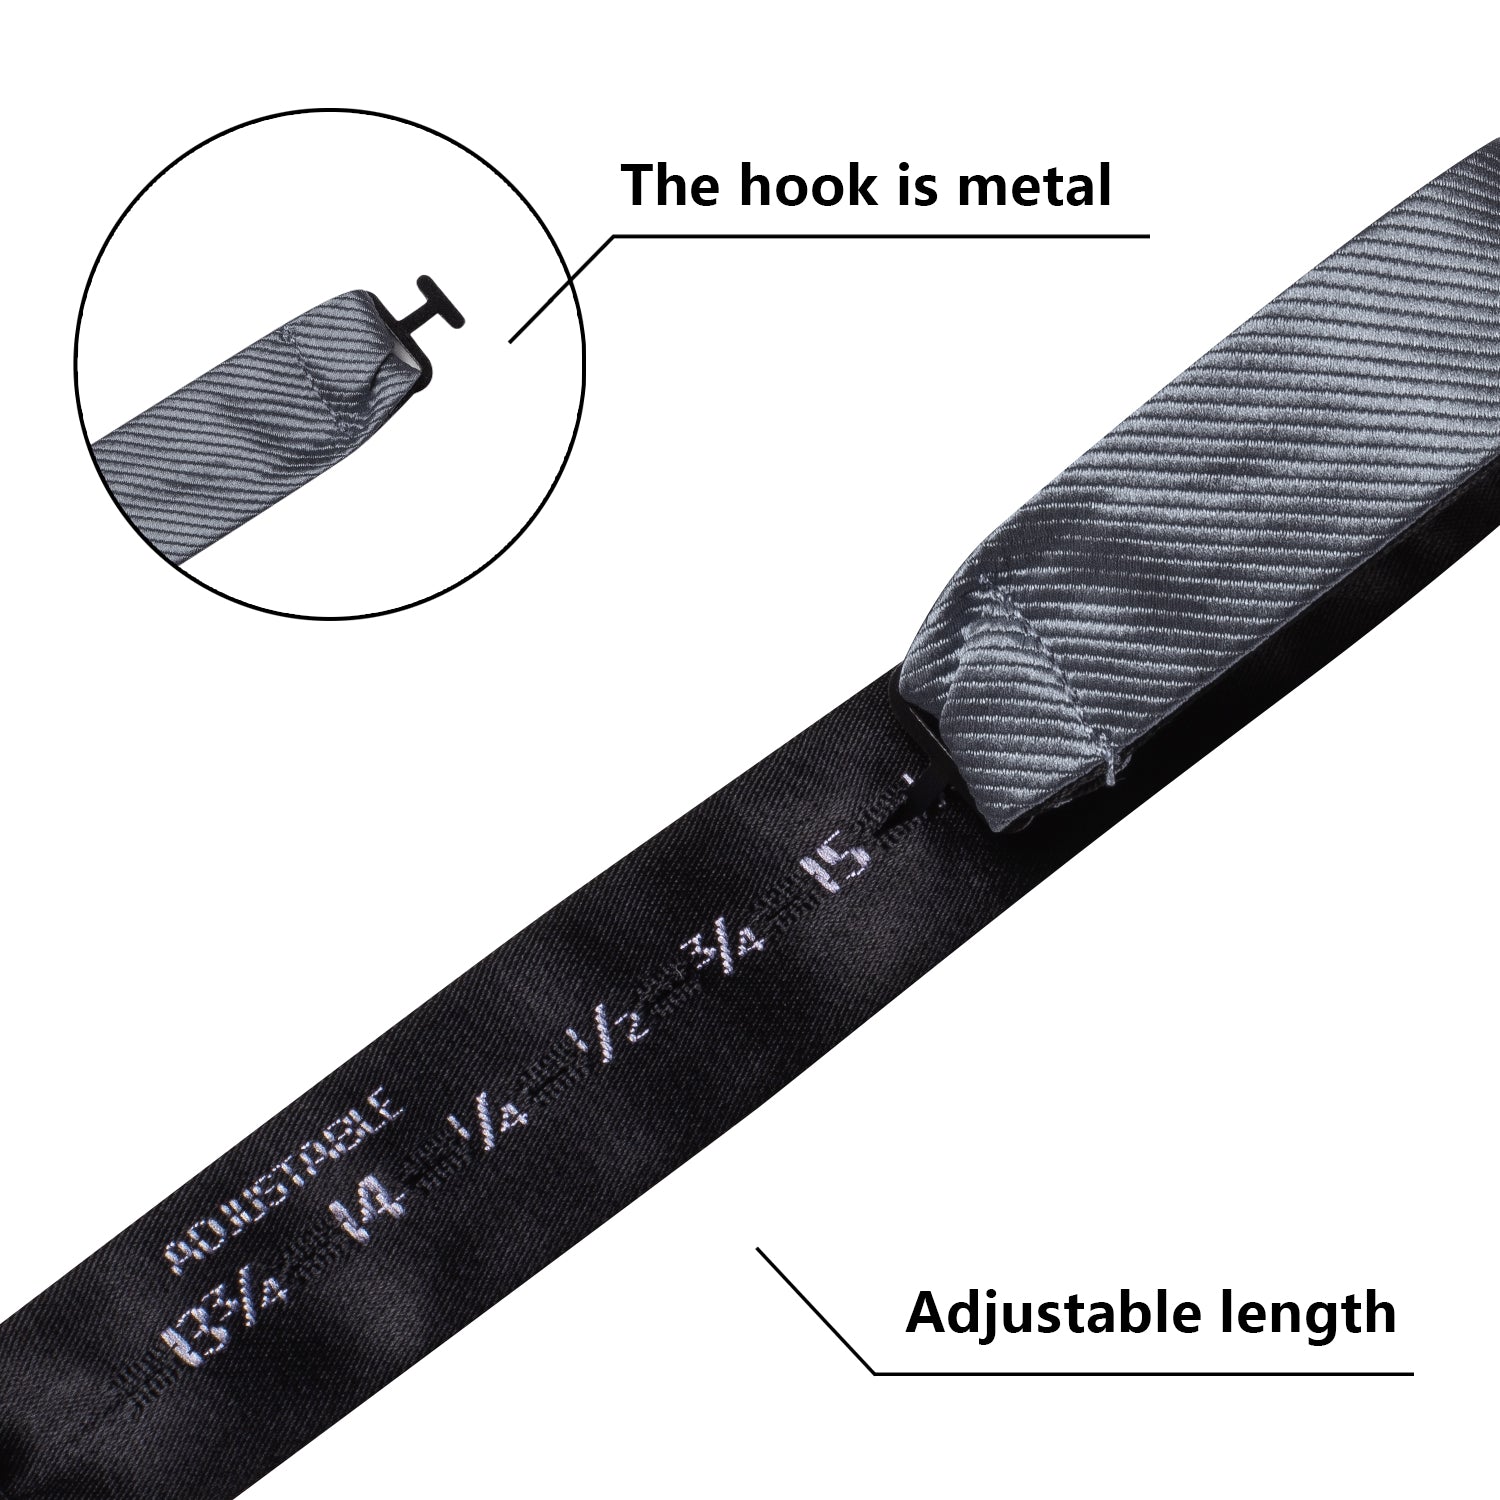 Grey Striped Silk Self-tied Bow Tie Pocket Square Cufflinks Set